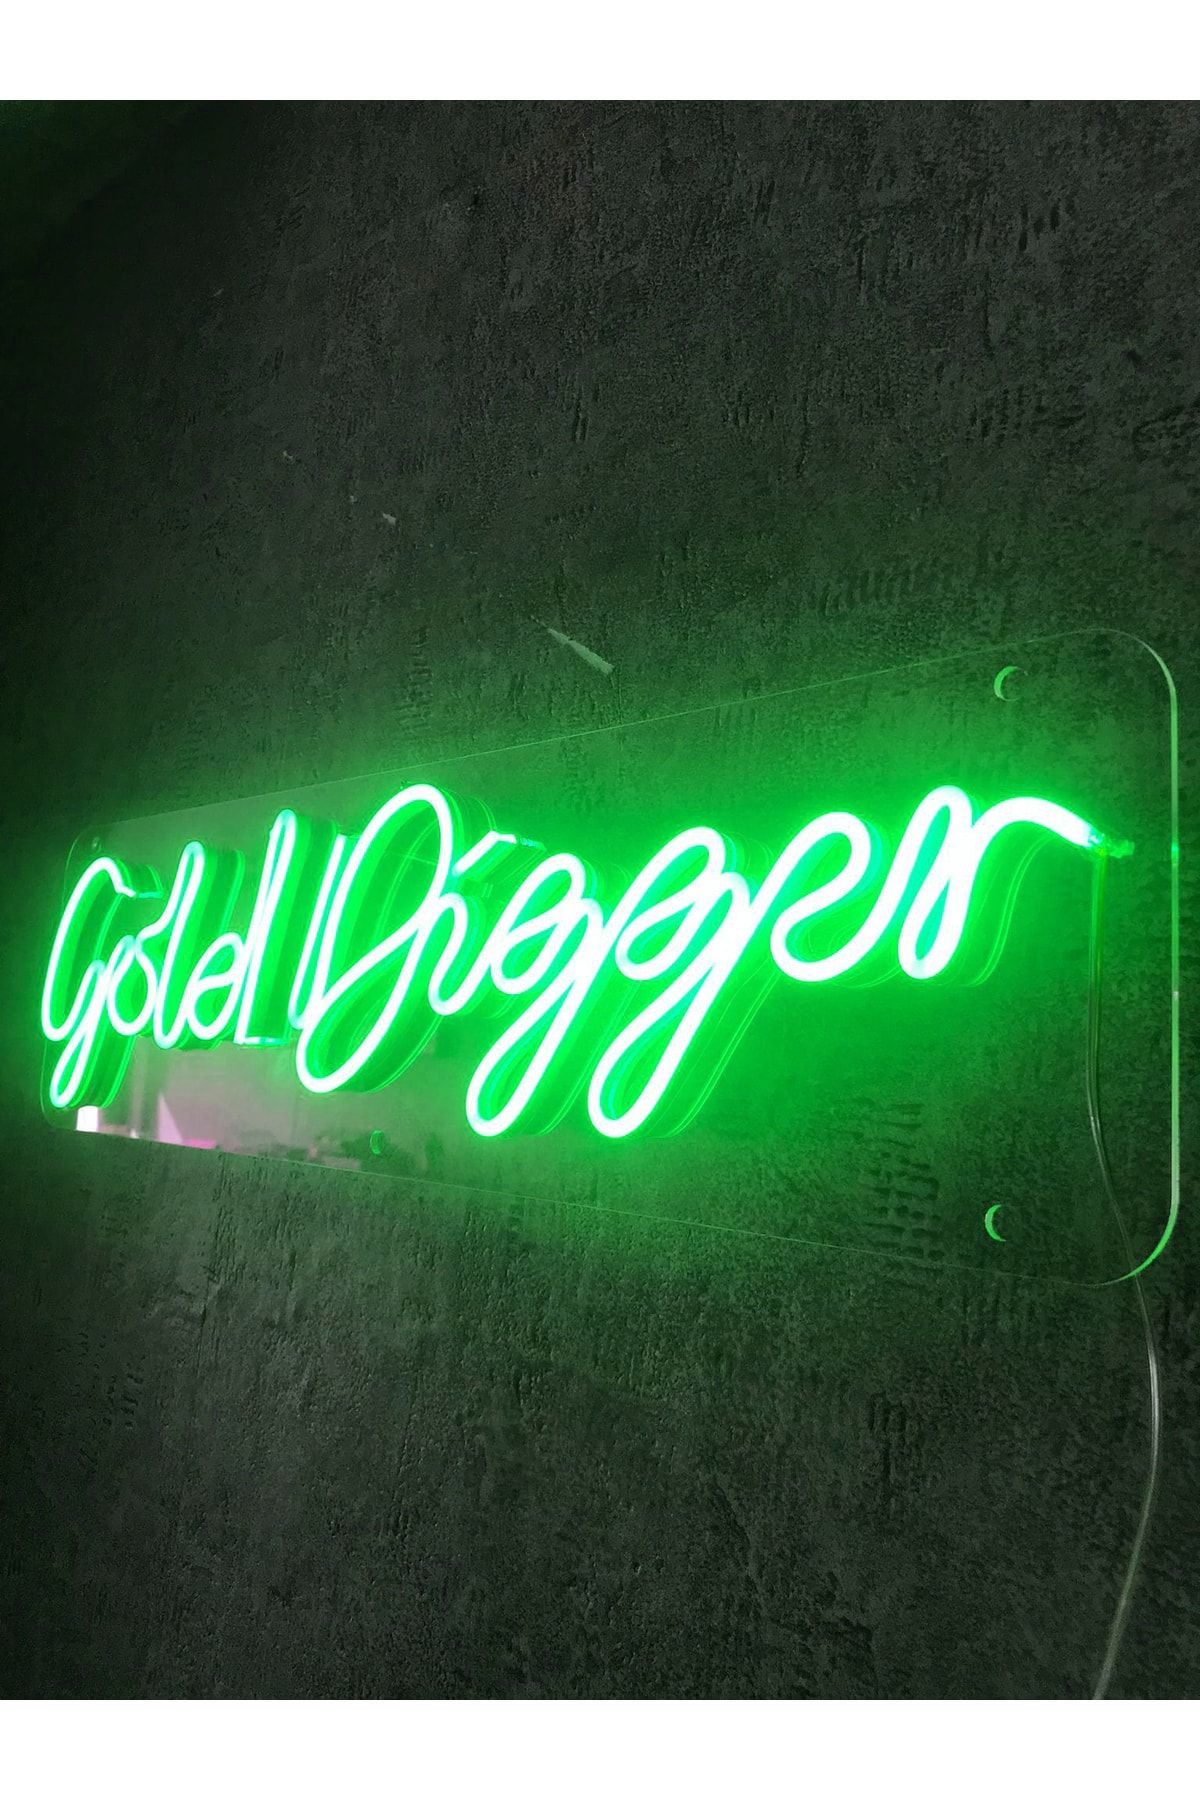 dekoraven Gold Digger Neon Led Tabela Dekoratif Aydınlatma